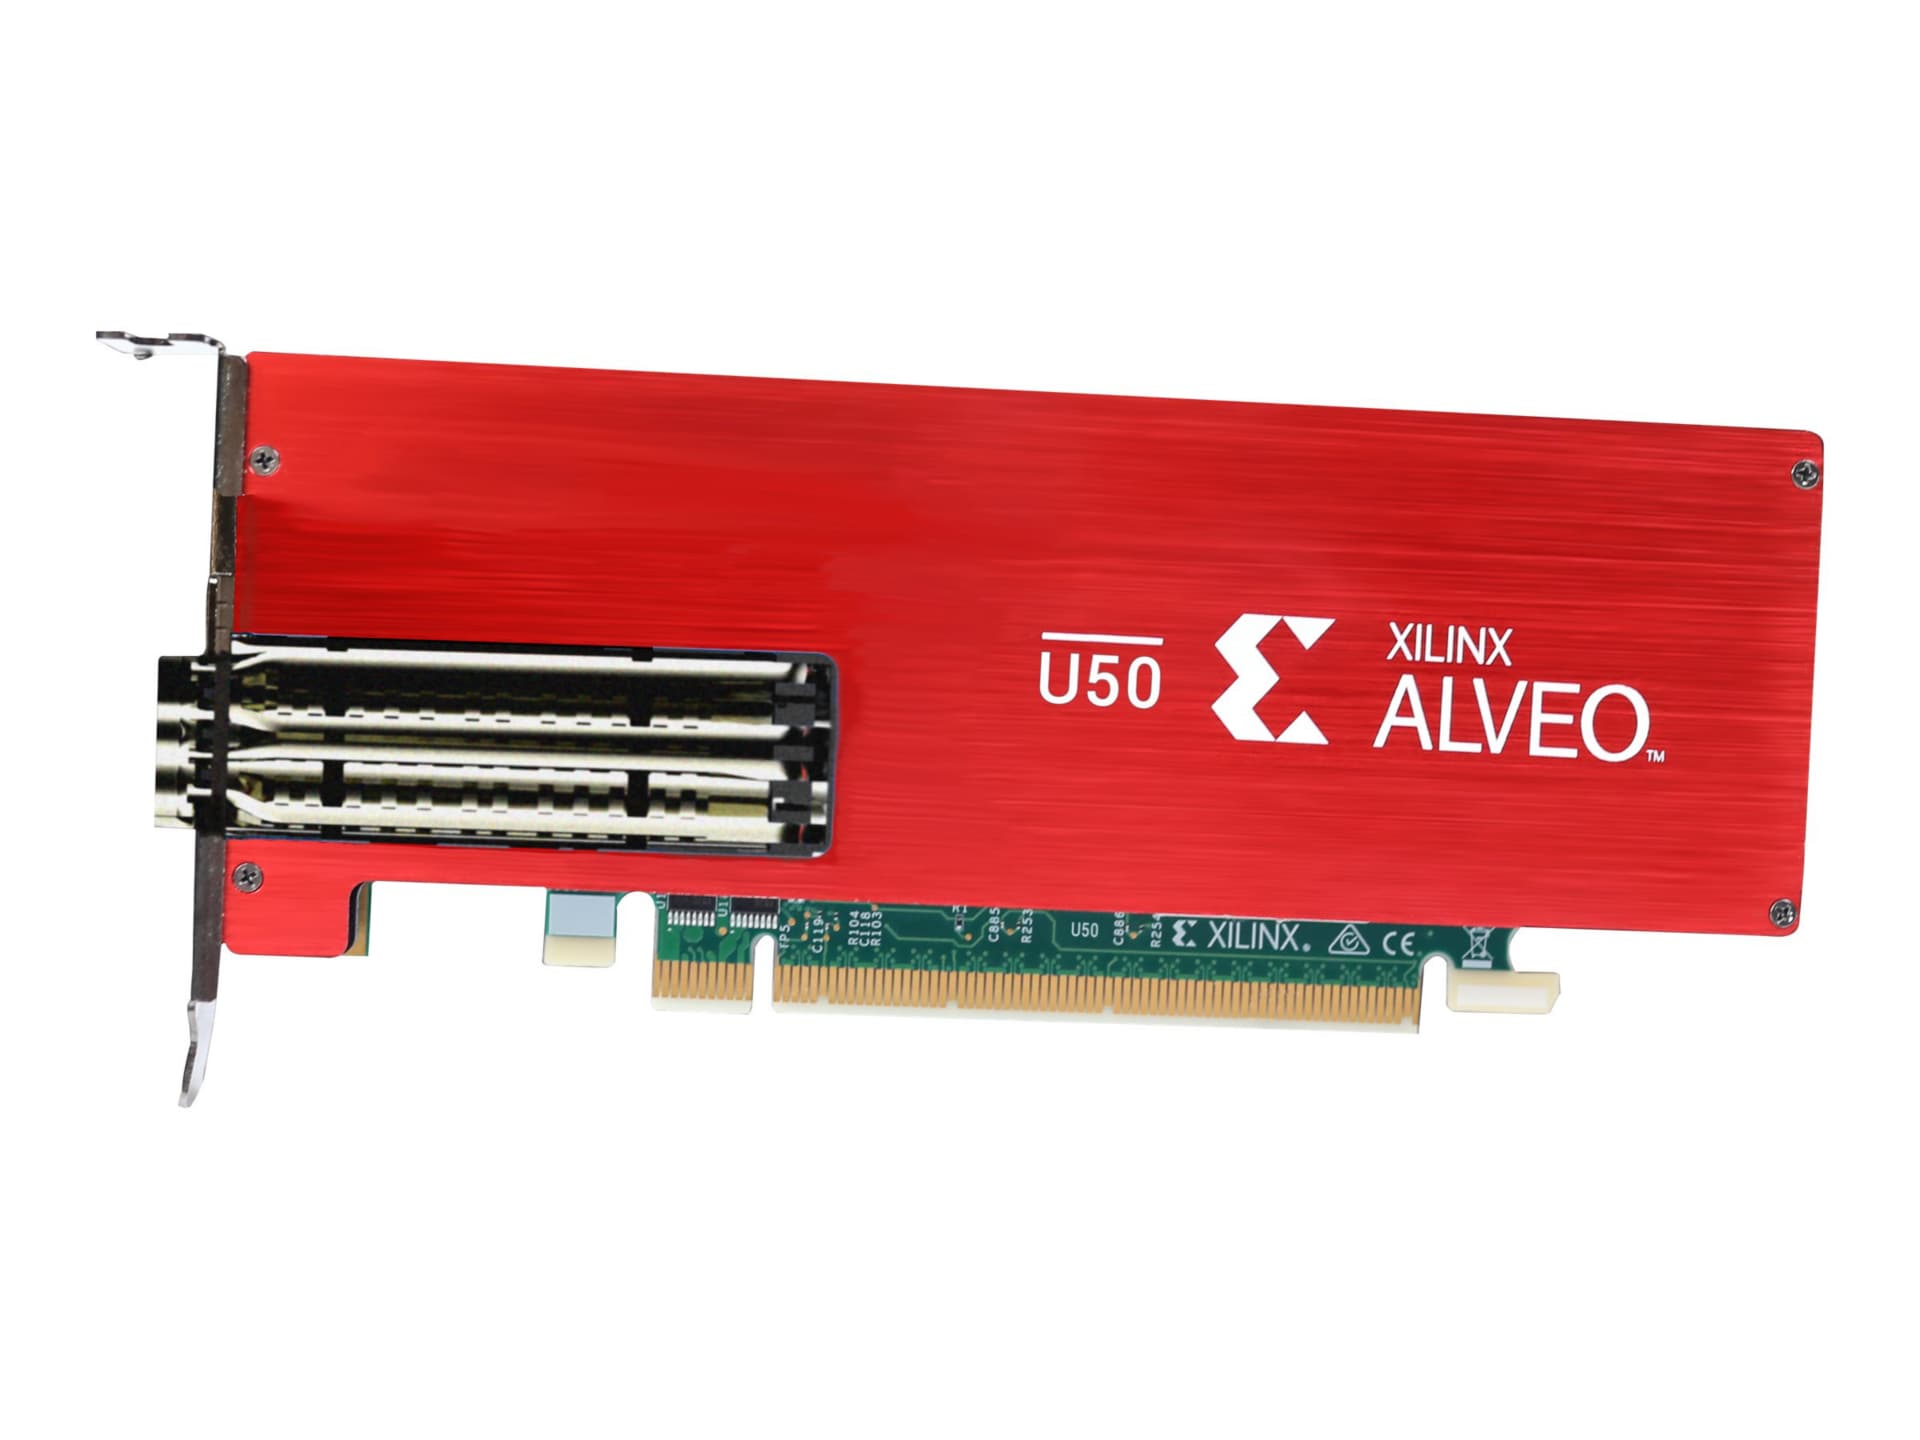 Xilinx Alveo U50 Data Center Accelerator Card - GPU computing processor - A